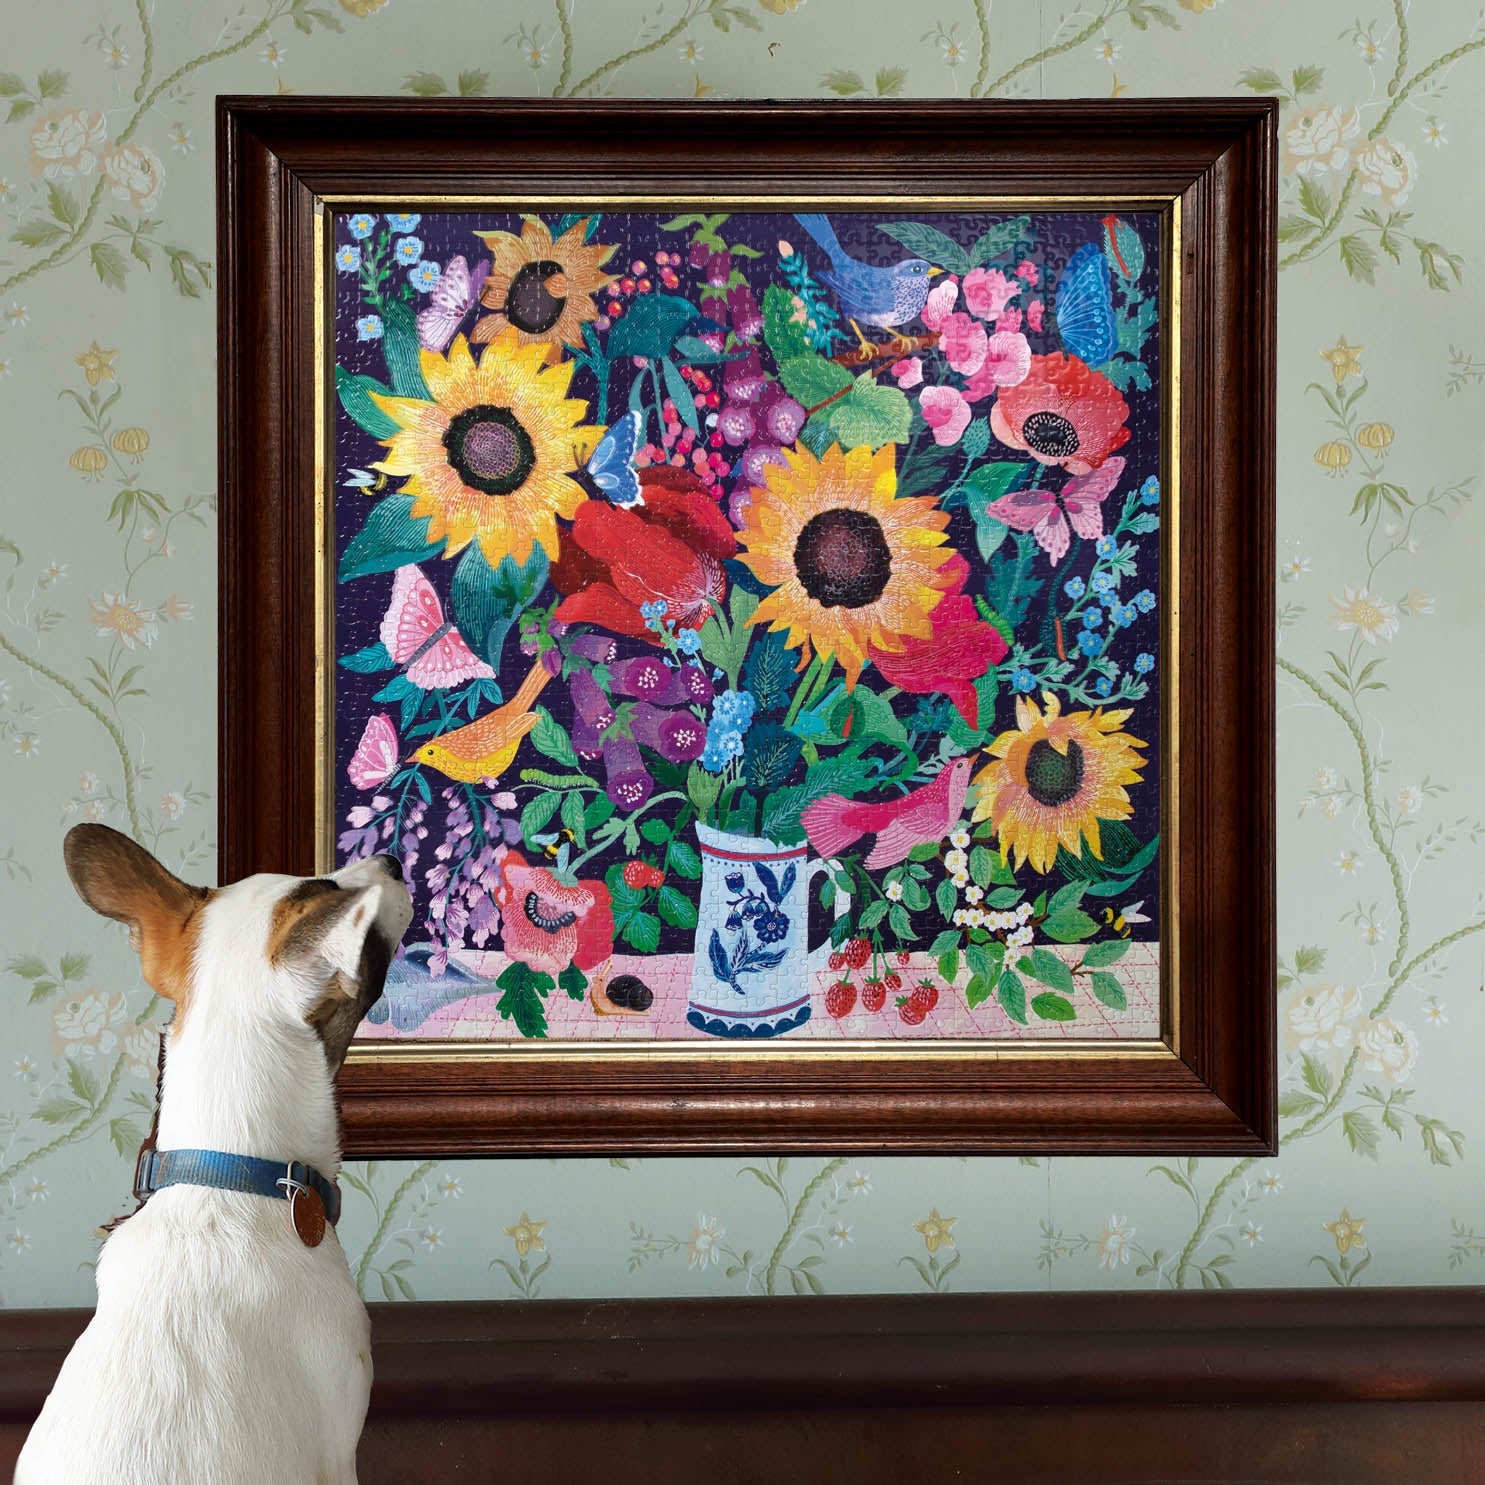 Sunflower and Poppy Summer Bouquet 1000 Piece Jigsaw Puzzle - Makes A Beautiful Gift | eeBoo Piece & Love